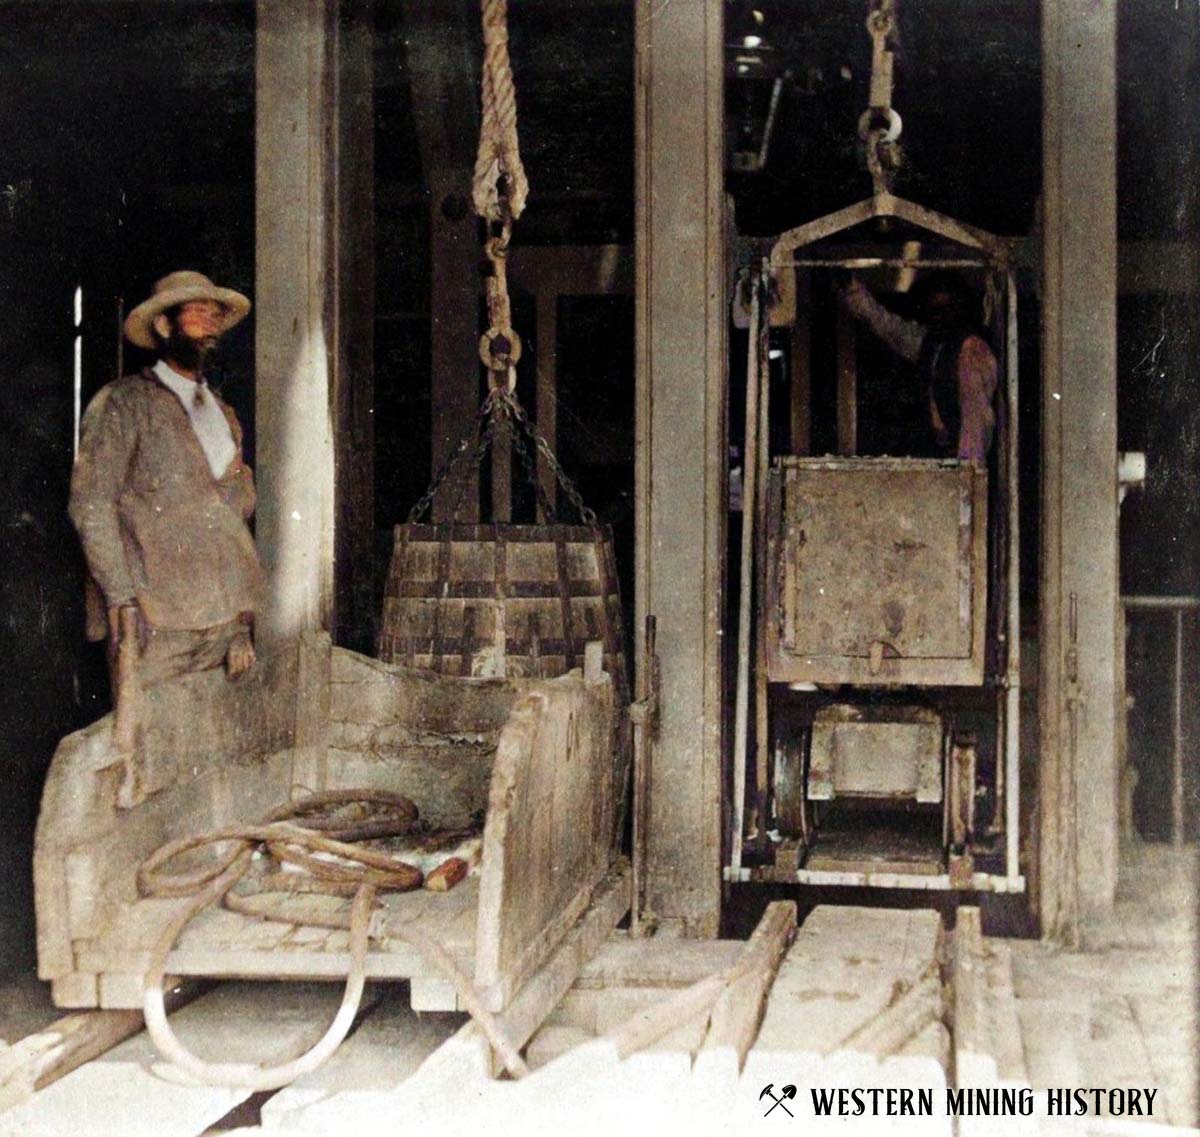 Hoisting Works of the Bullion Mine - Gold Hill, Nevada 1860s